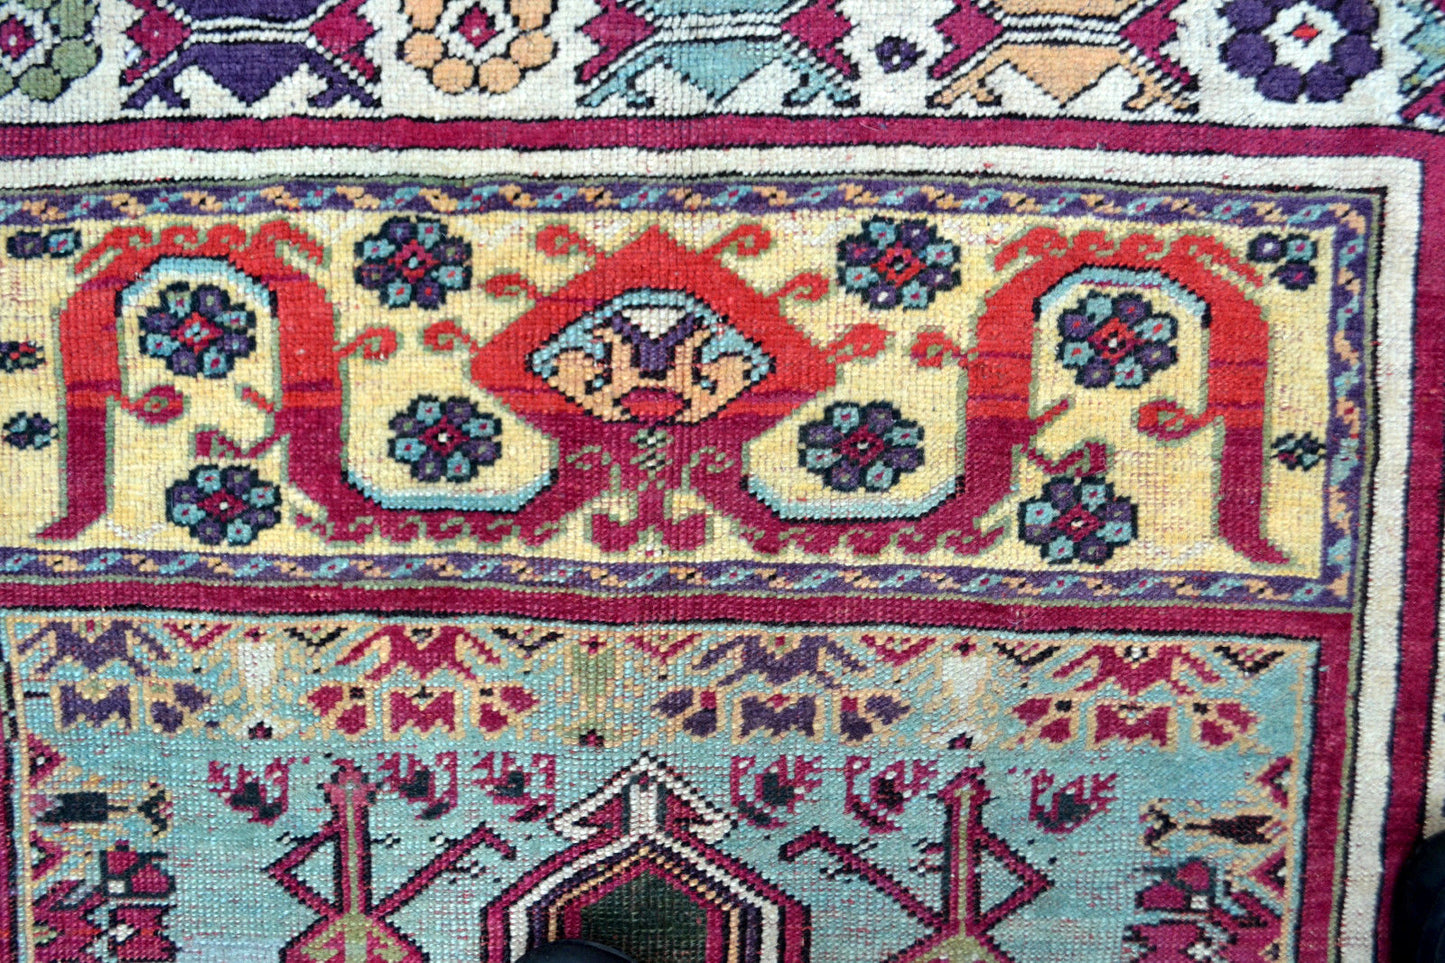 Handmade antique Turkish Kersheir rug 3.9' x 5.9' (120cm x 180cm) 1880s - 1P25